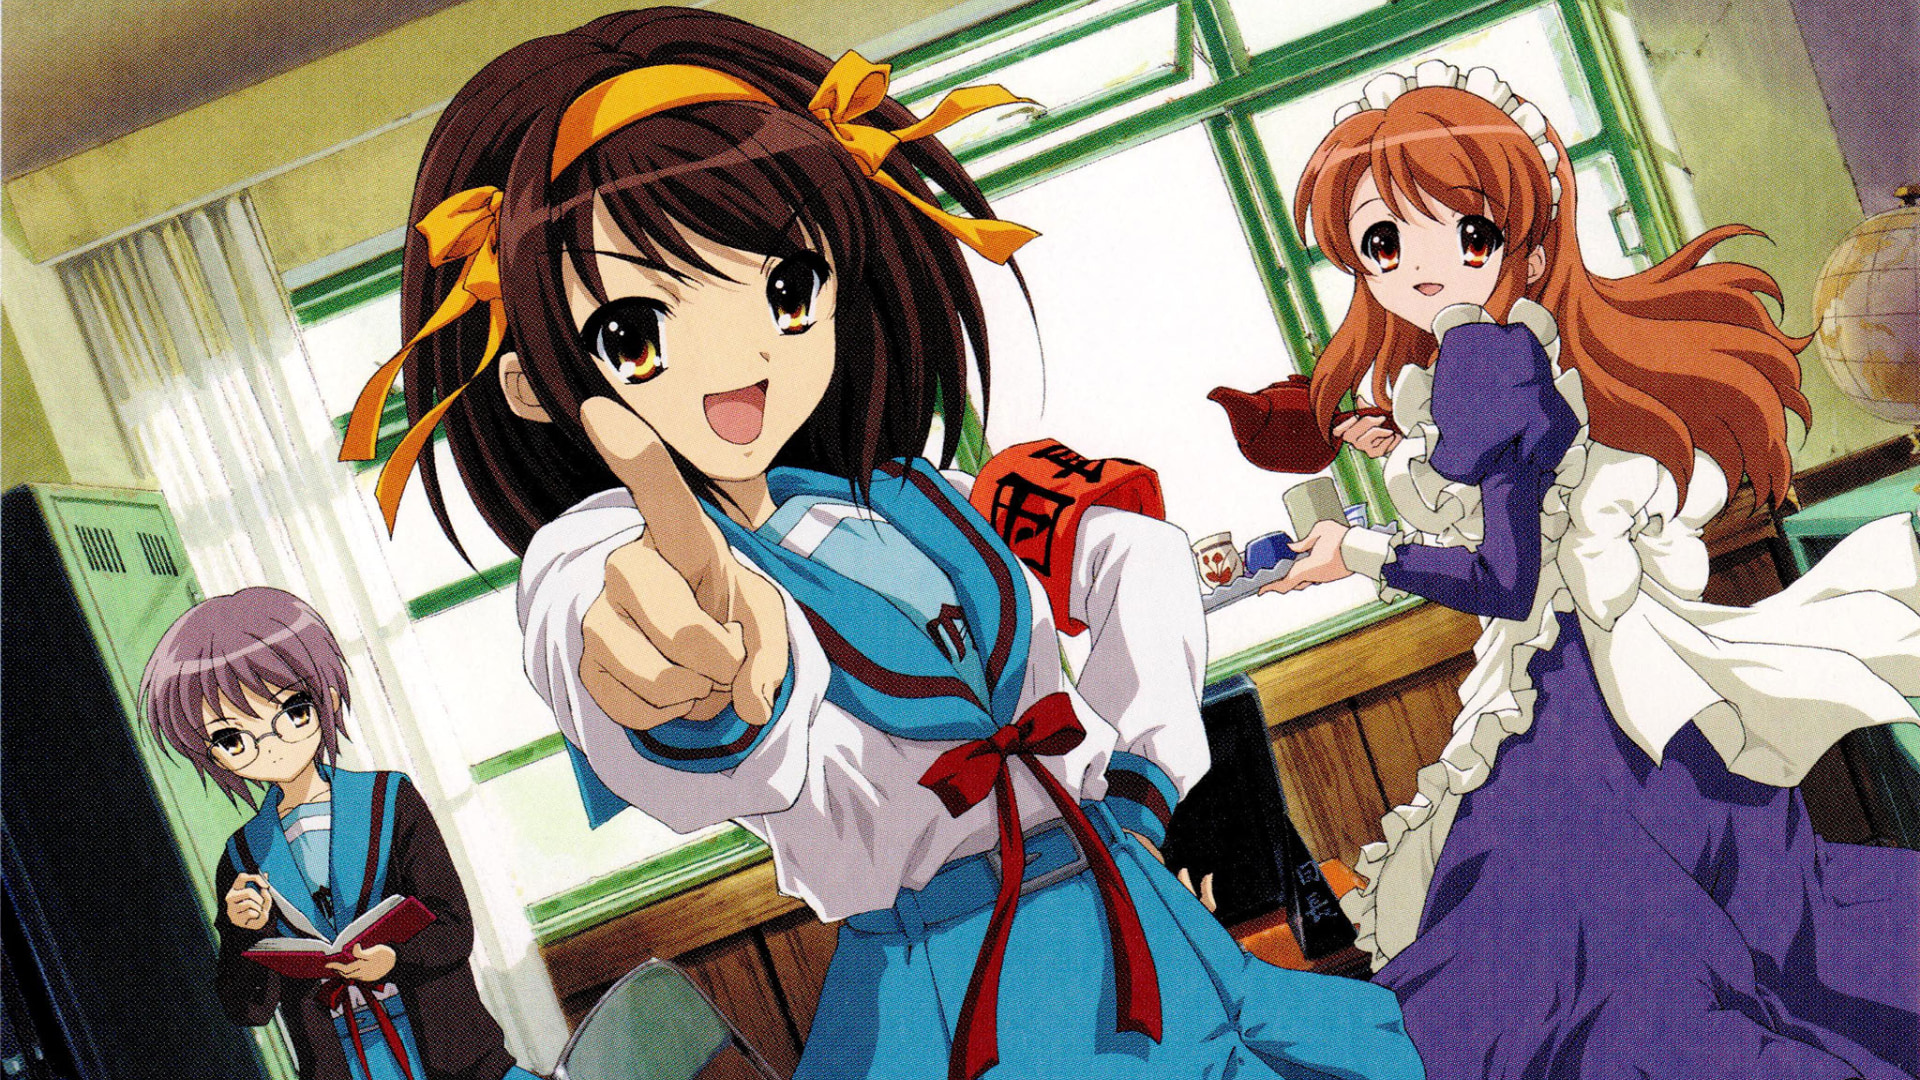 Be a god in PUBG Mobile's Haruhi Suzumiya anime collaboration | ONE Esports